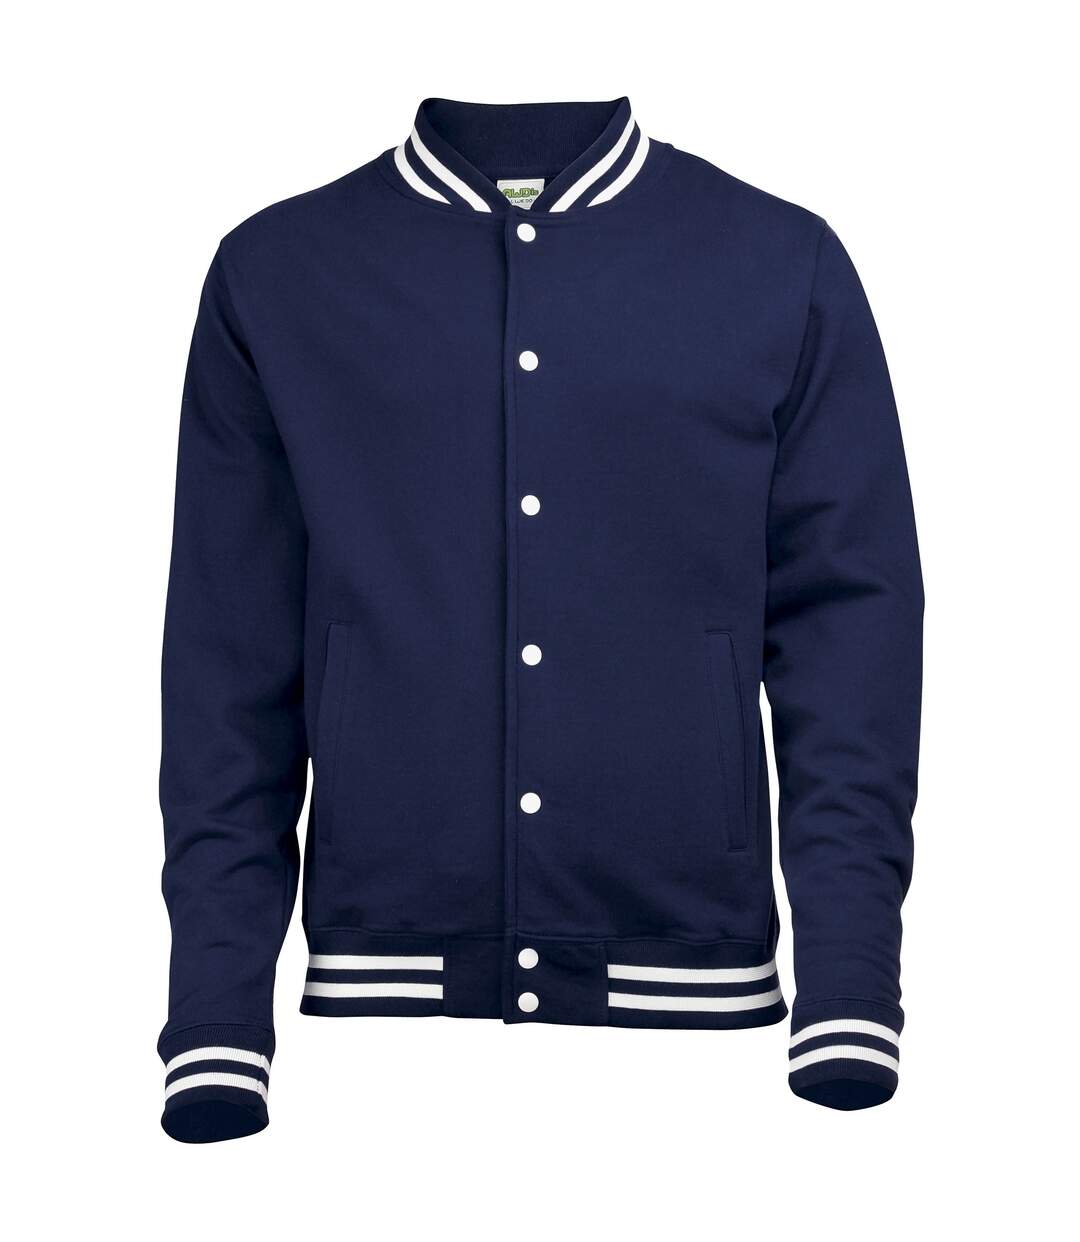 Awdis Mens College Jacket (Oxford Navy)